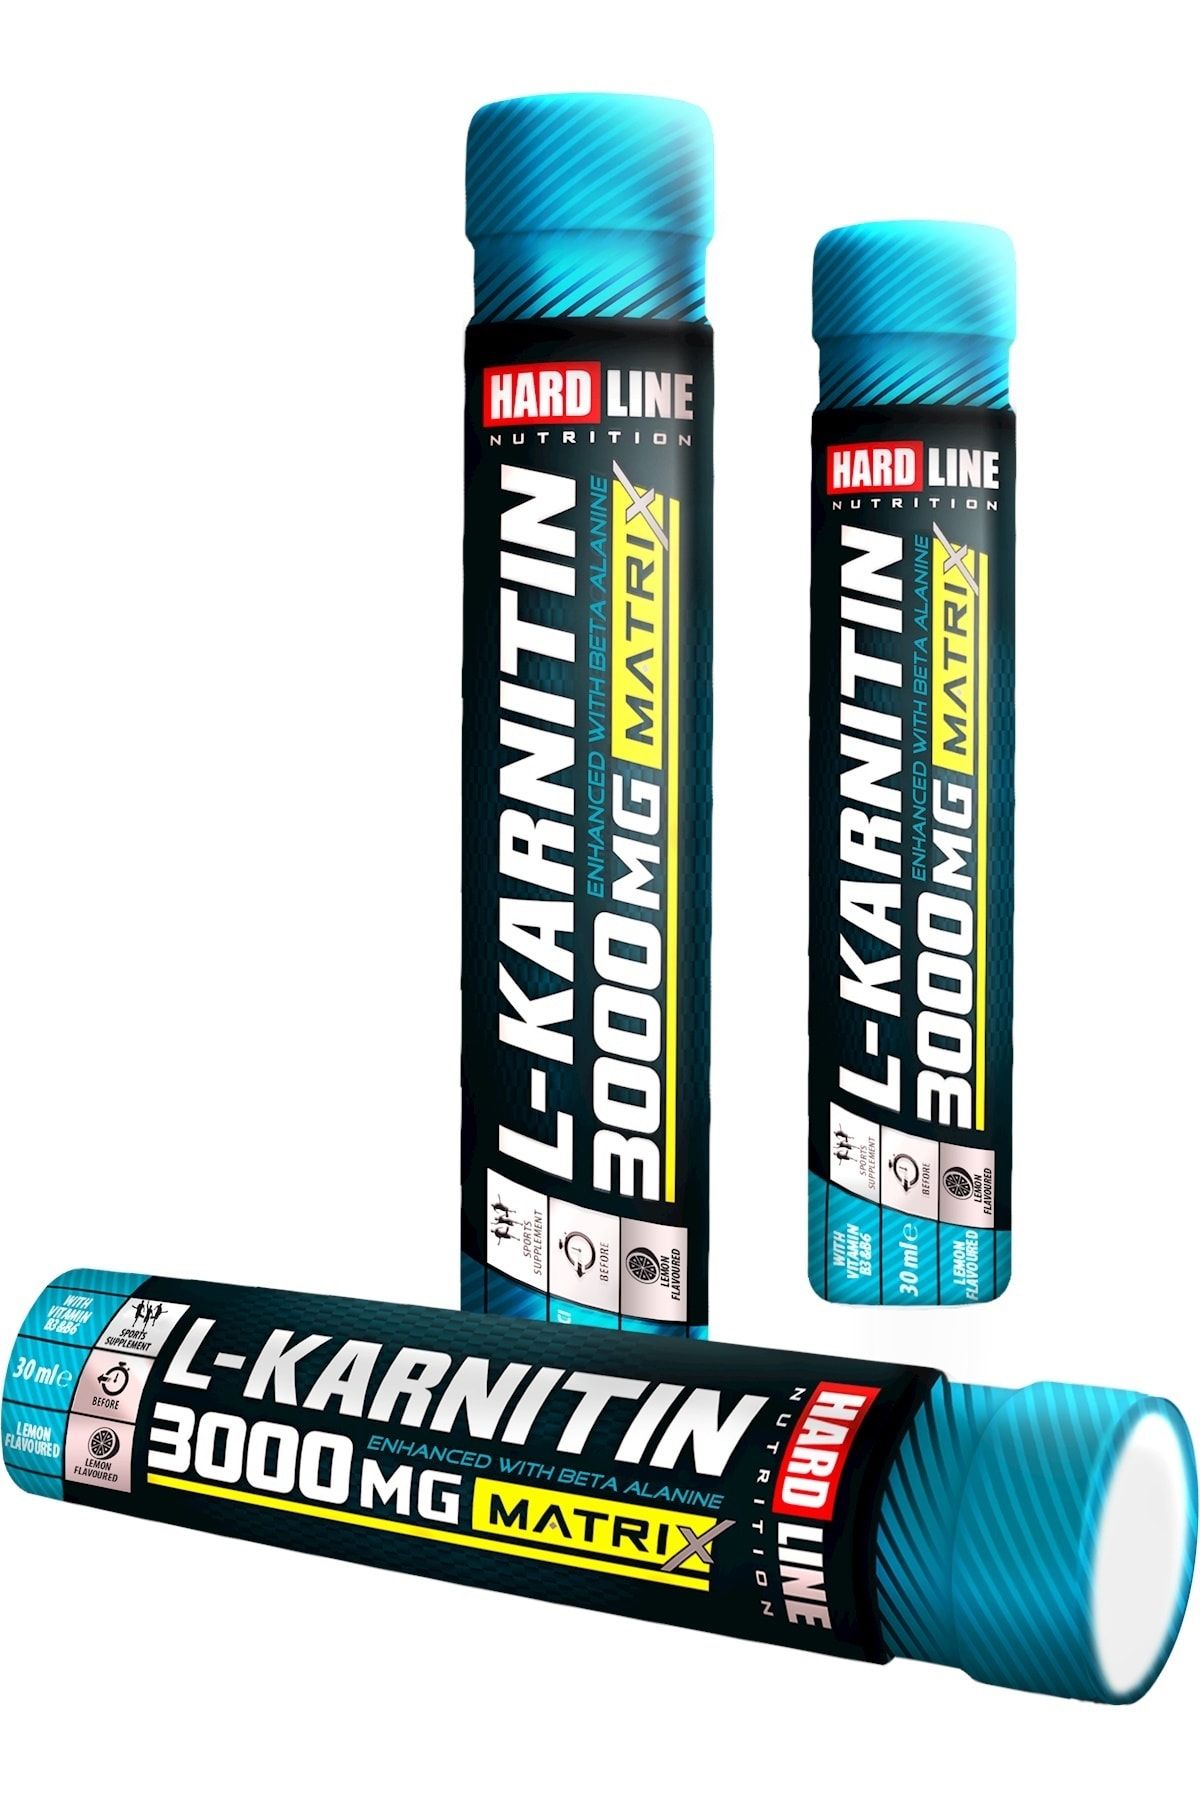 Hardline L-karnitin Matrix 3000 mg Şeftali 1 adet